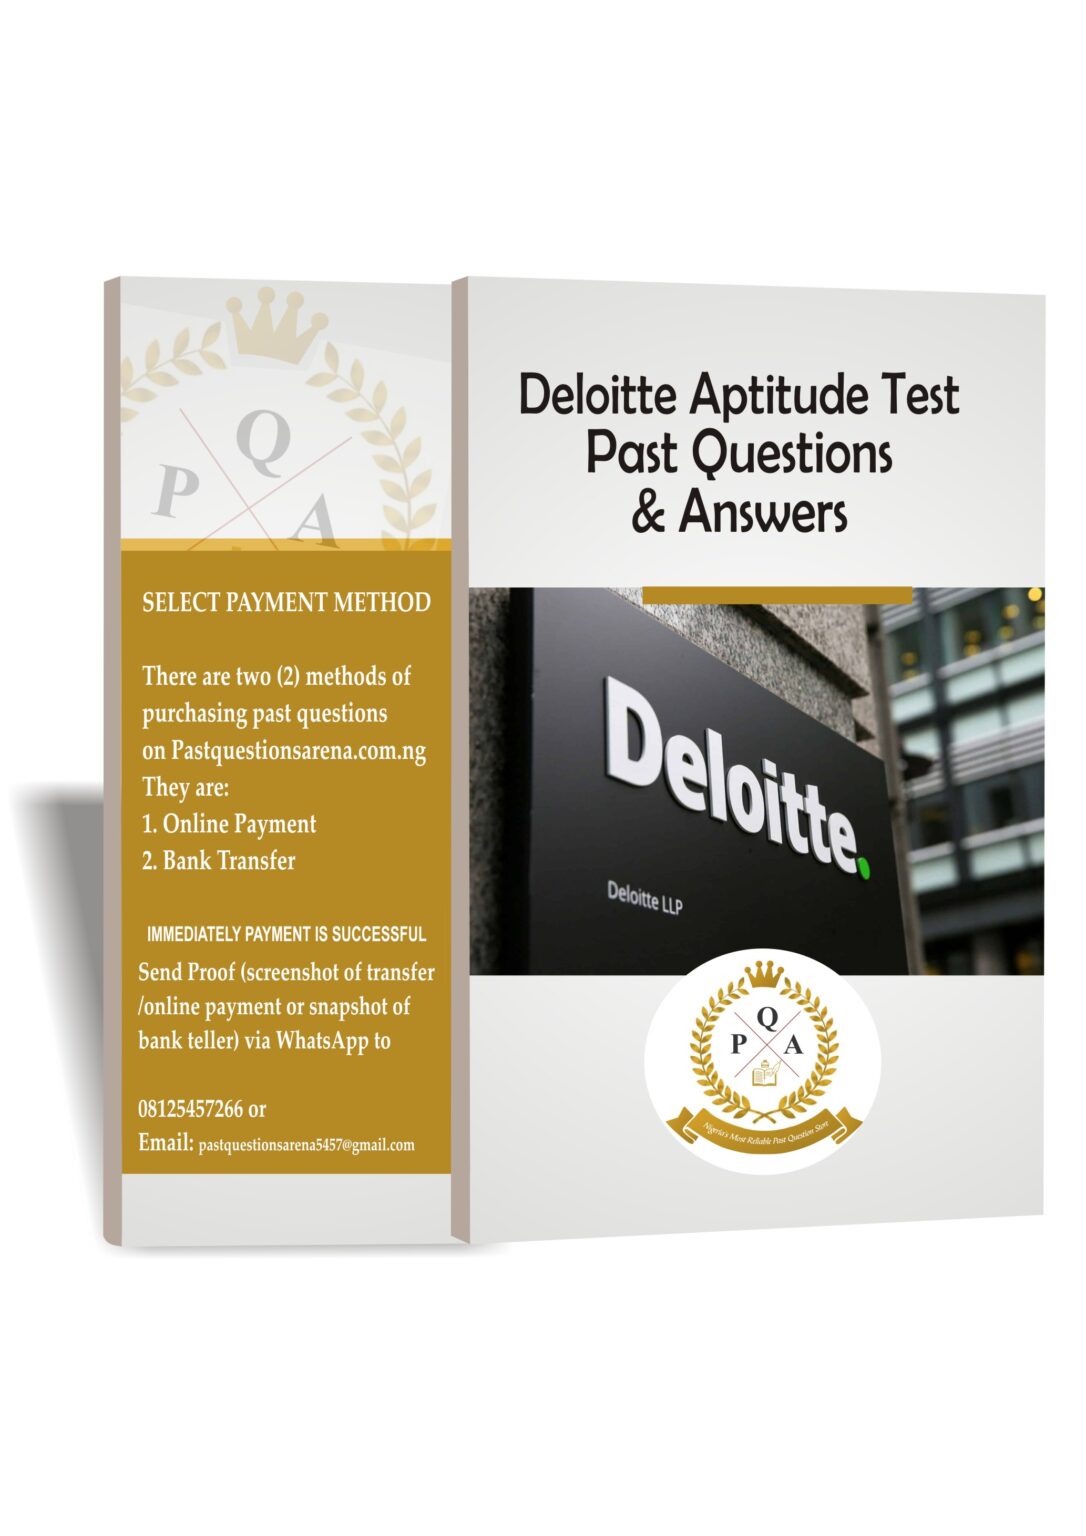 deloitte-aptitude-test-past-questions-and-questions-download-pdf